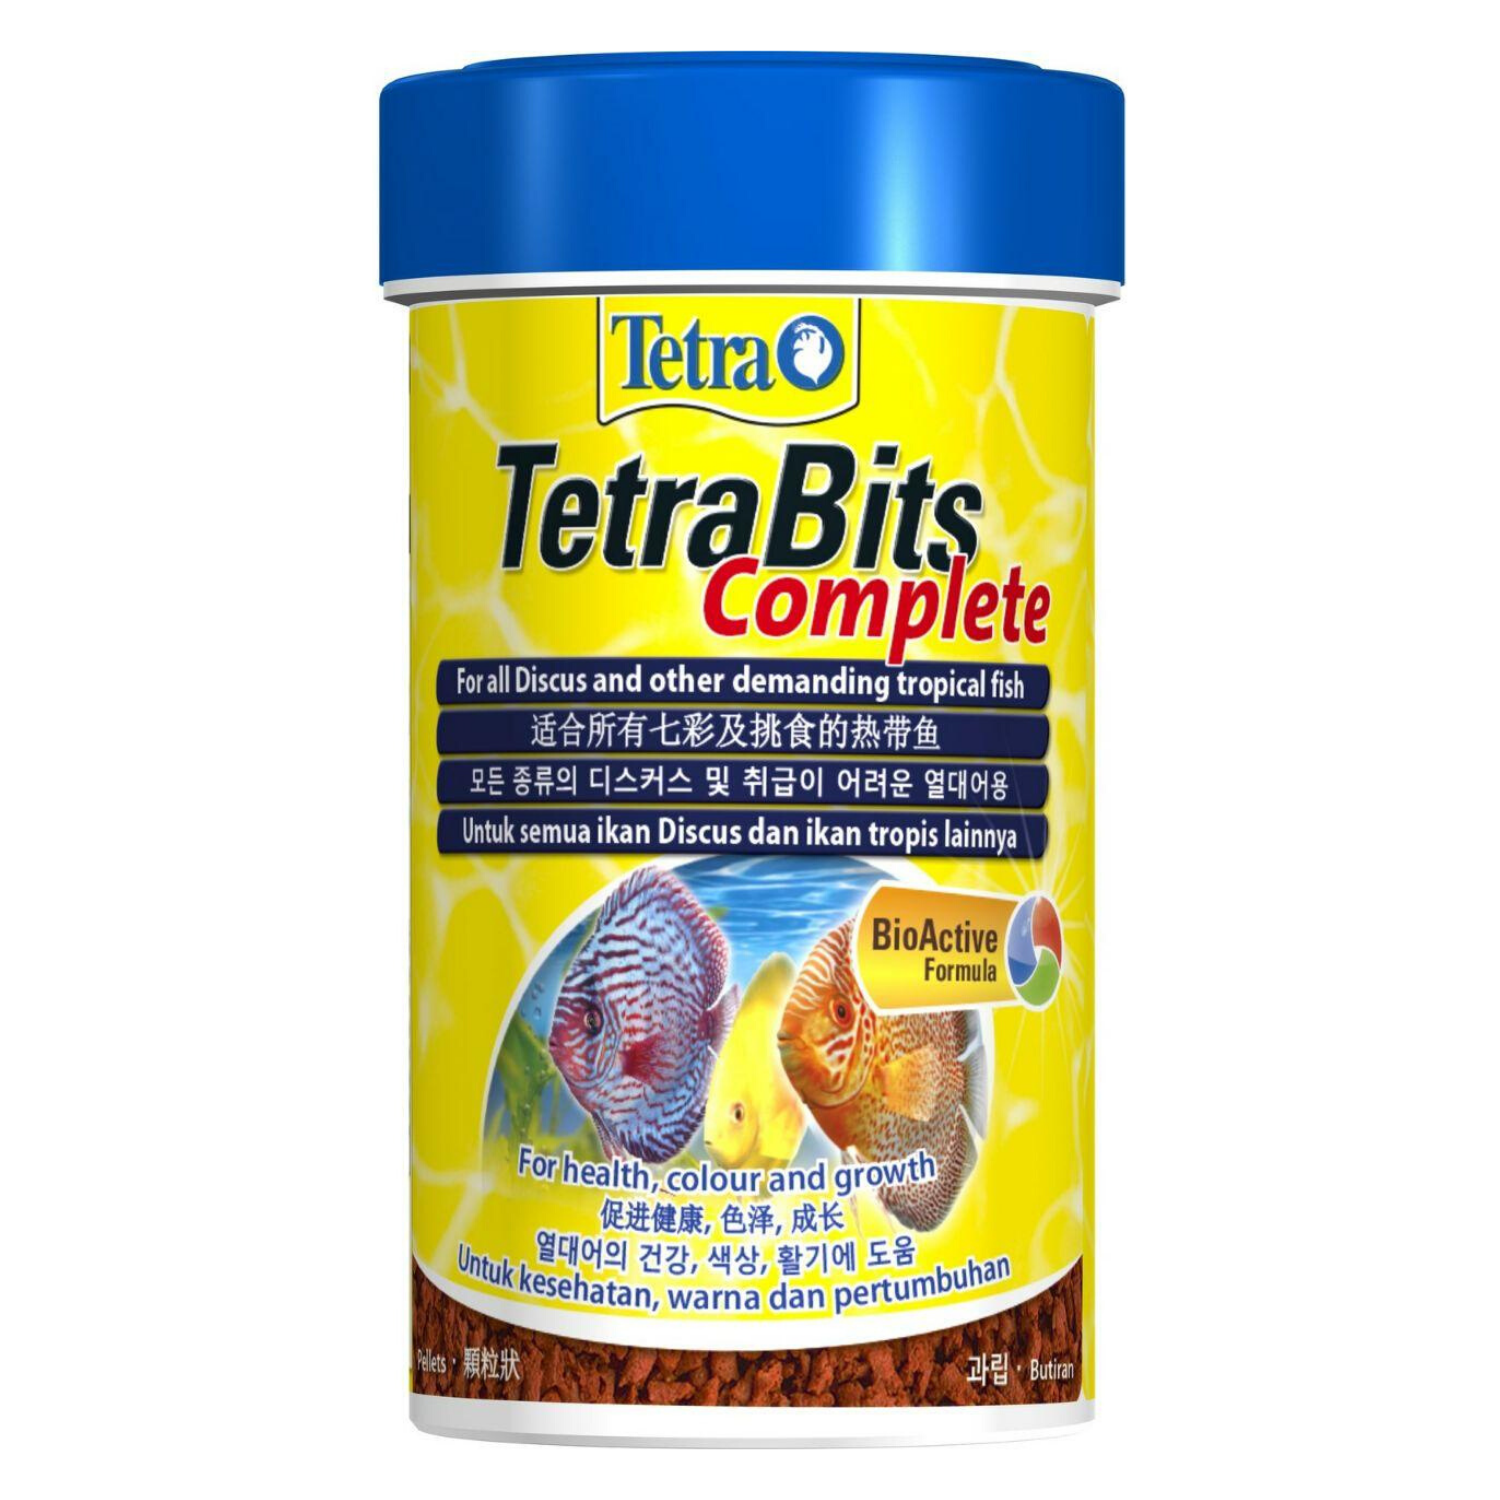 TetraBits Complete - 30g / 93g / 300g / 1.15kg